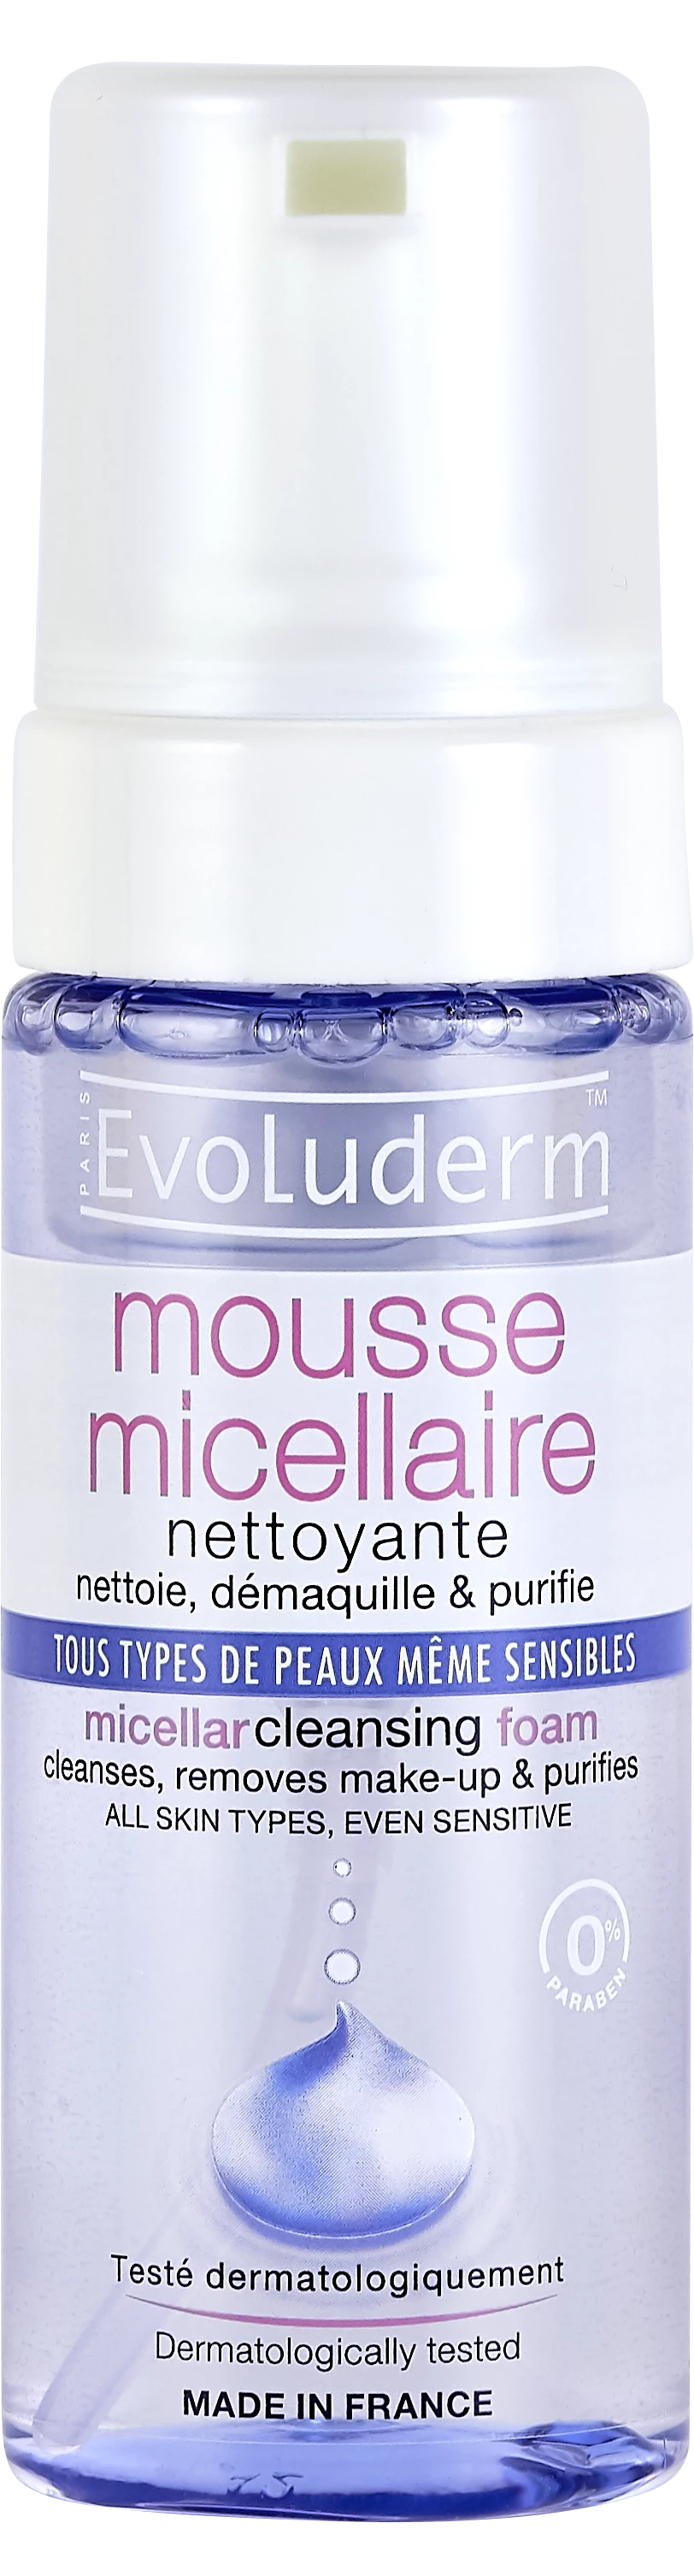 Mousse Micellaire Nettoyante 150ml - Evoluderm